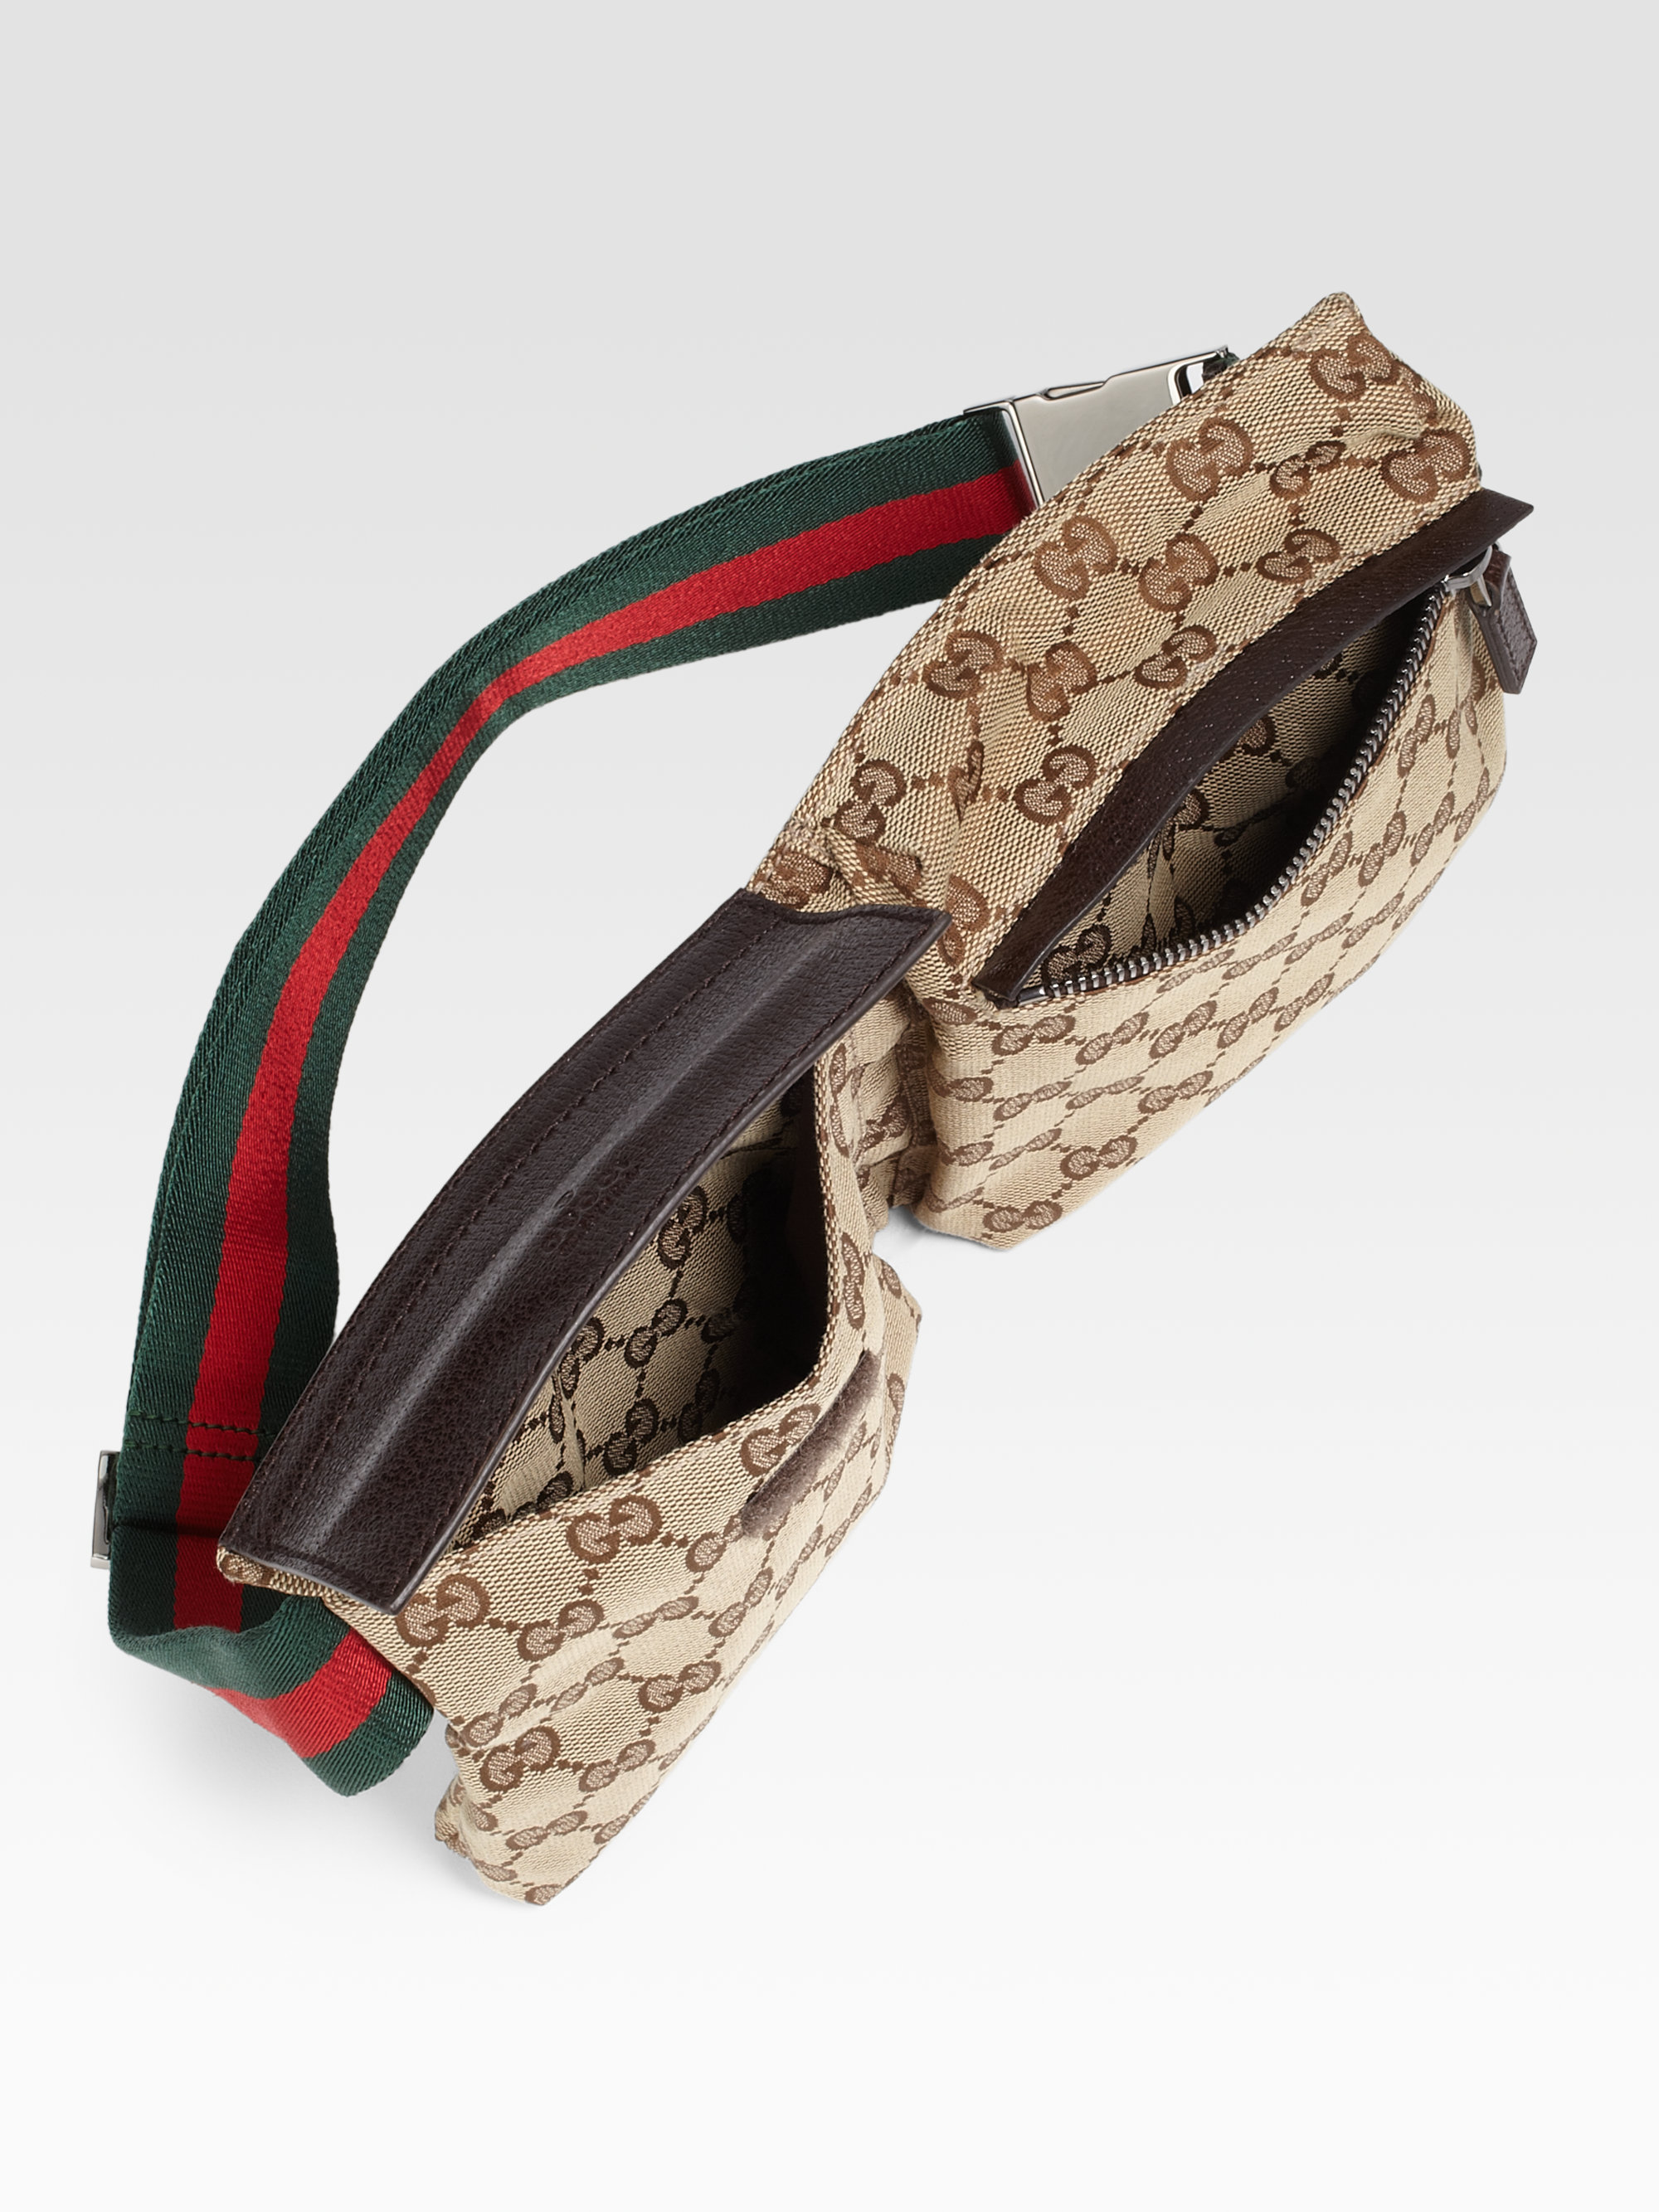 Gucci Original Gg Canvas Belt Bag in Natural - Lyst